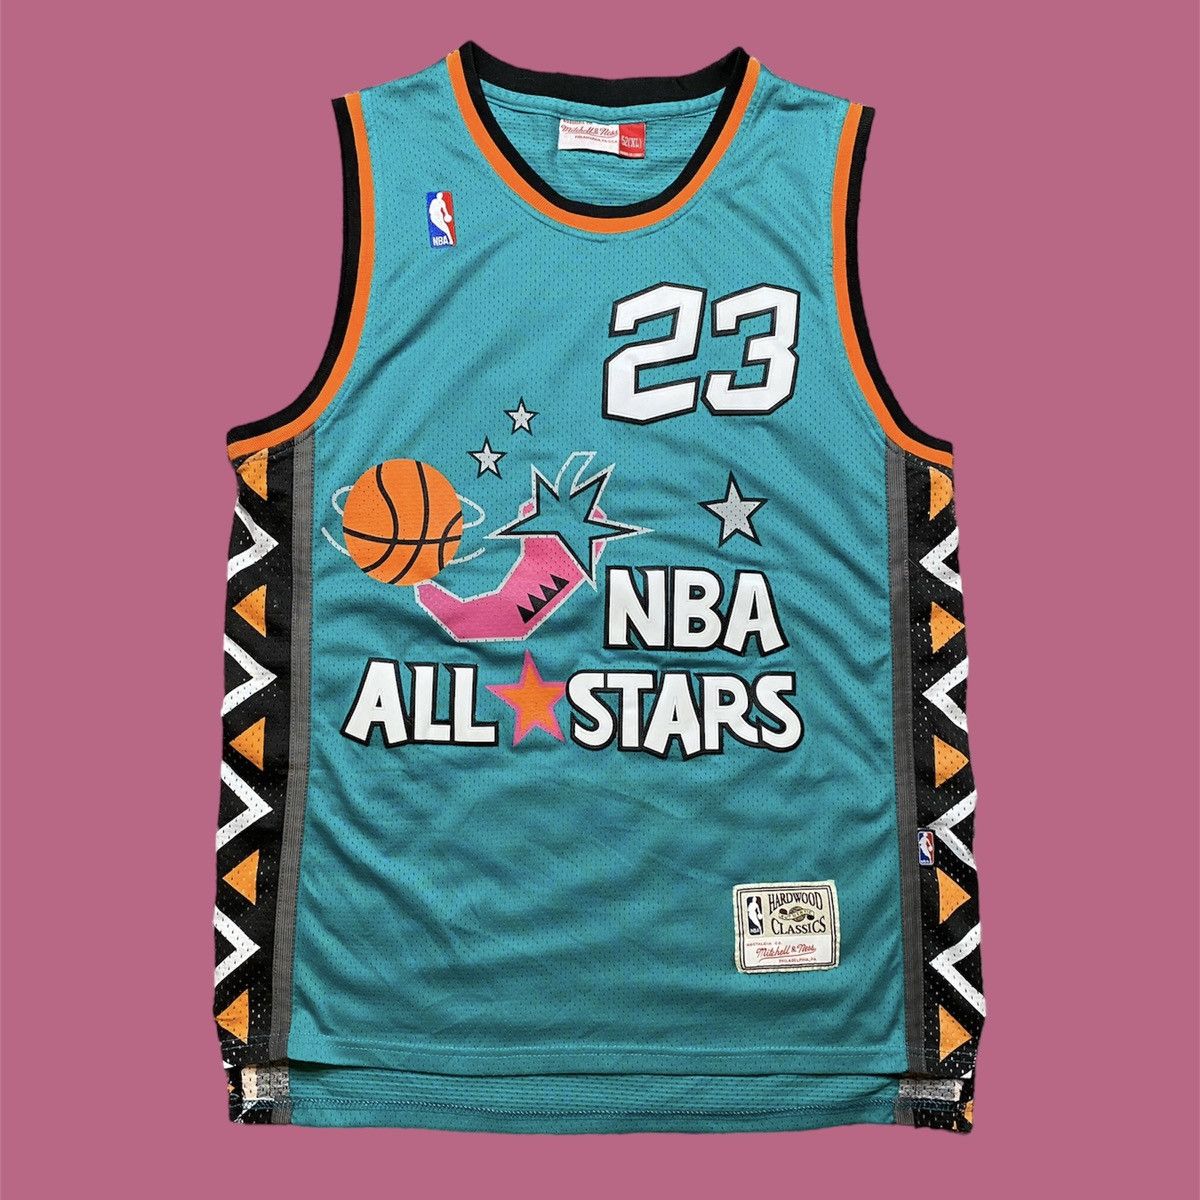 NBA all star jersey Michael Jordan 1996